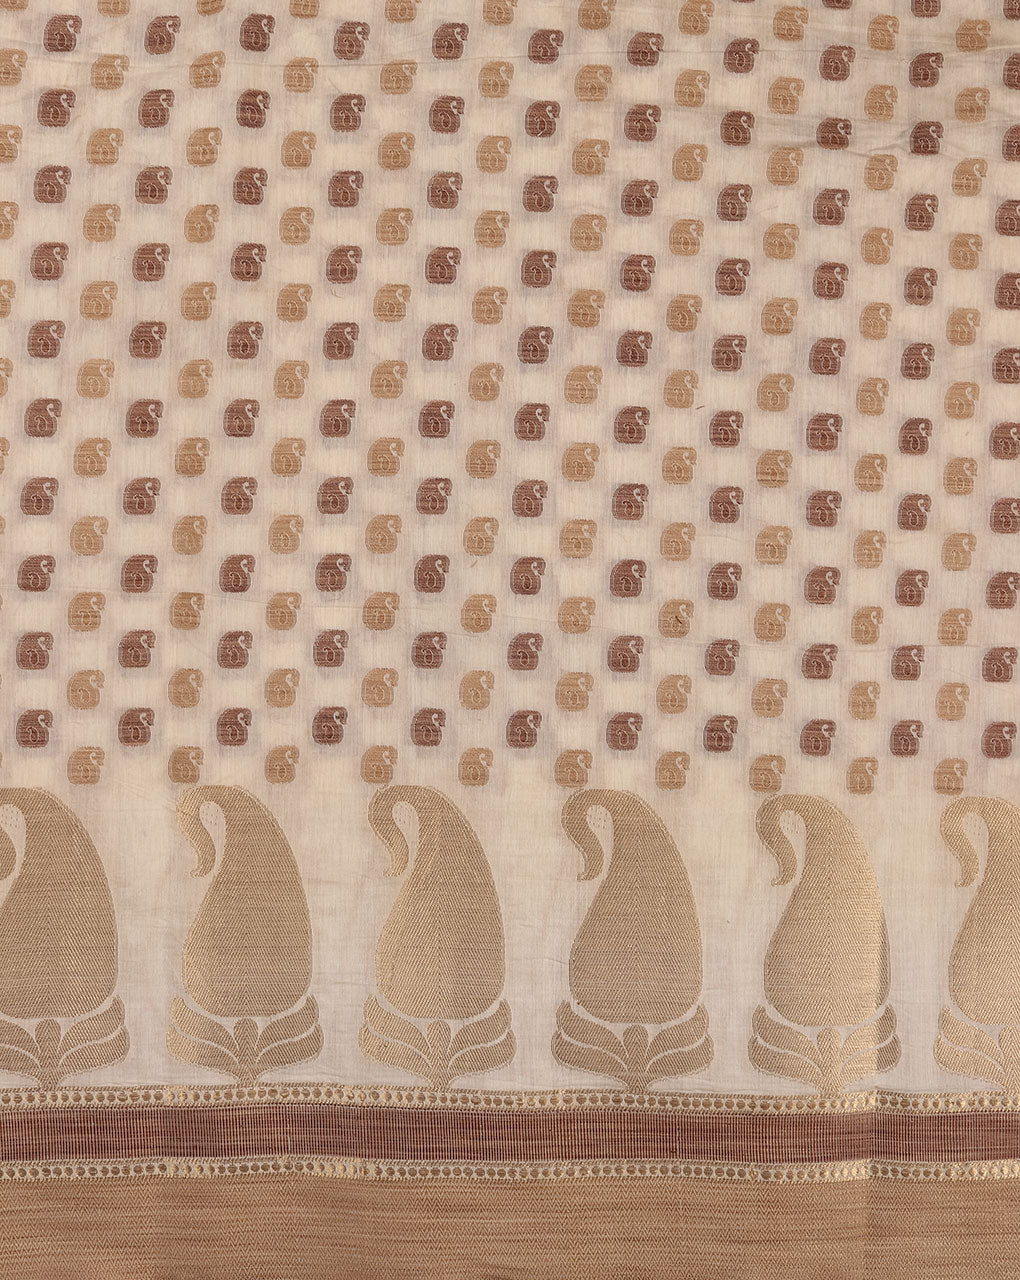 Woven Cotton Jacquard Border Chanderi Fabric - Fabriclore.com